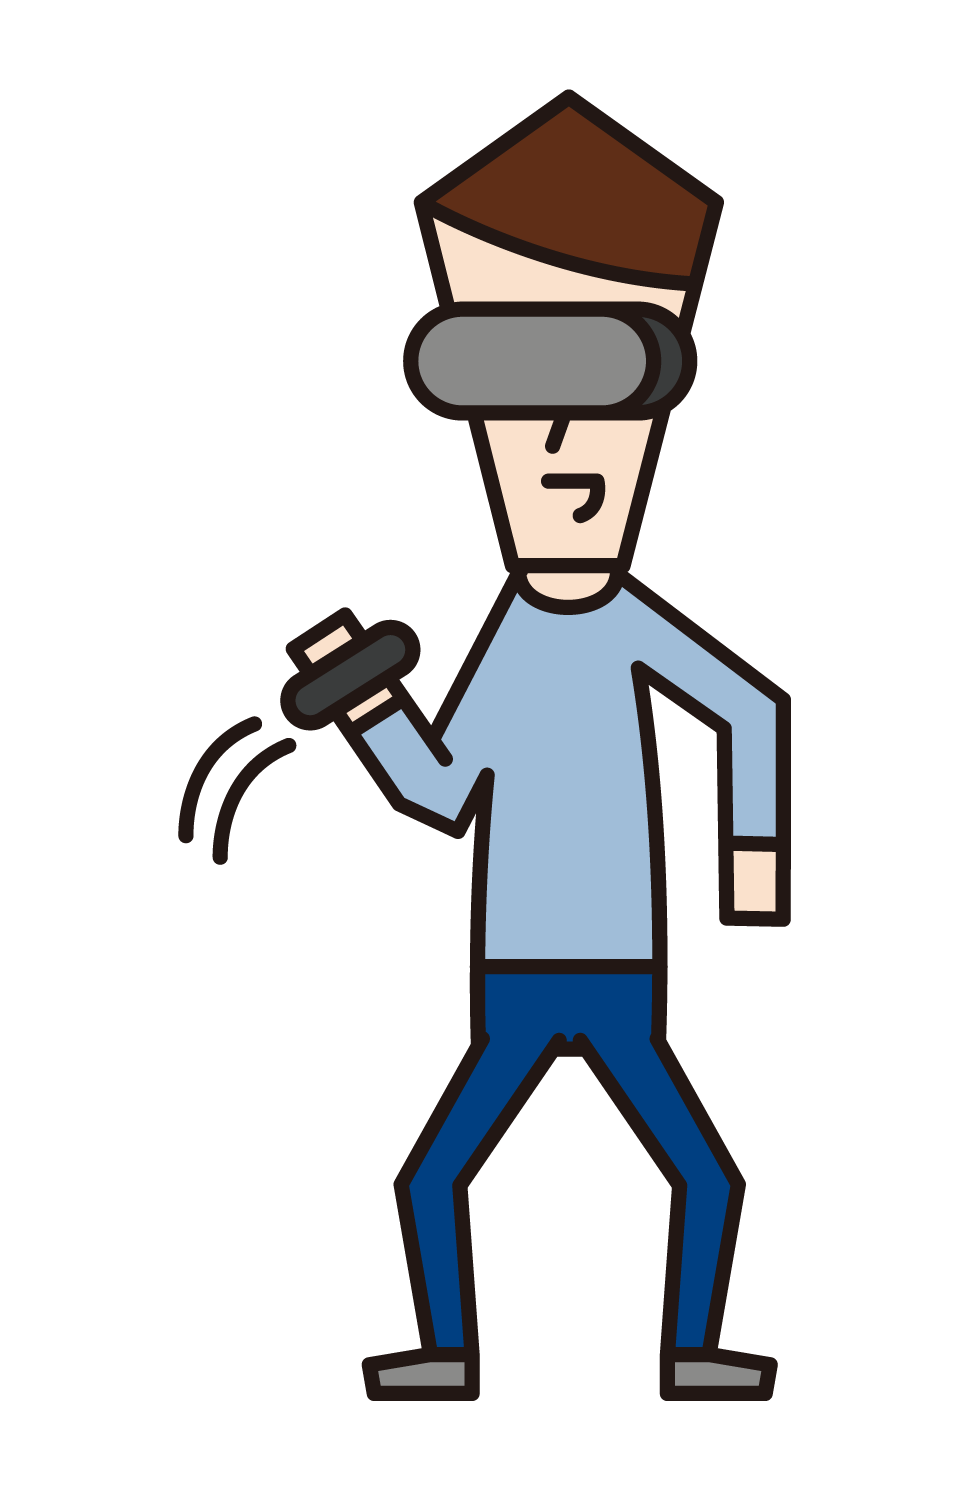 Illustration of a man who enjoys VR